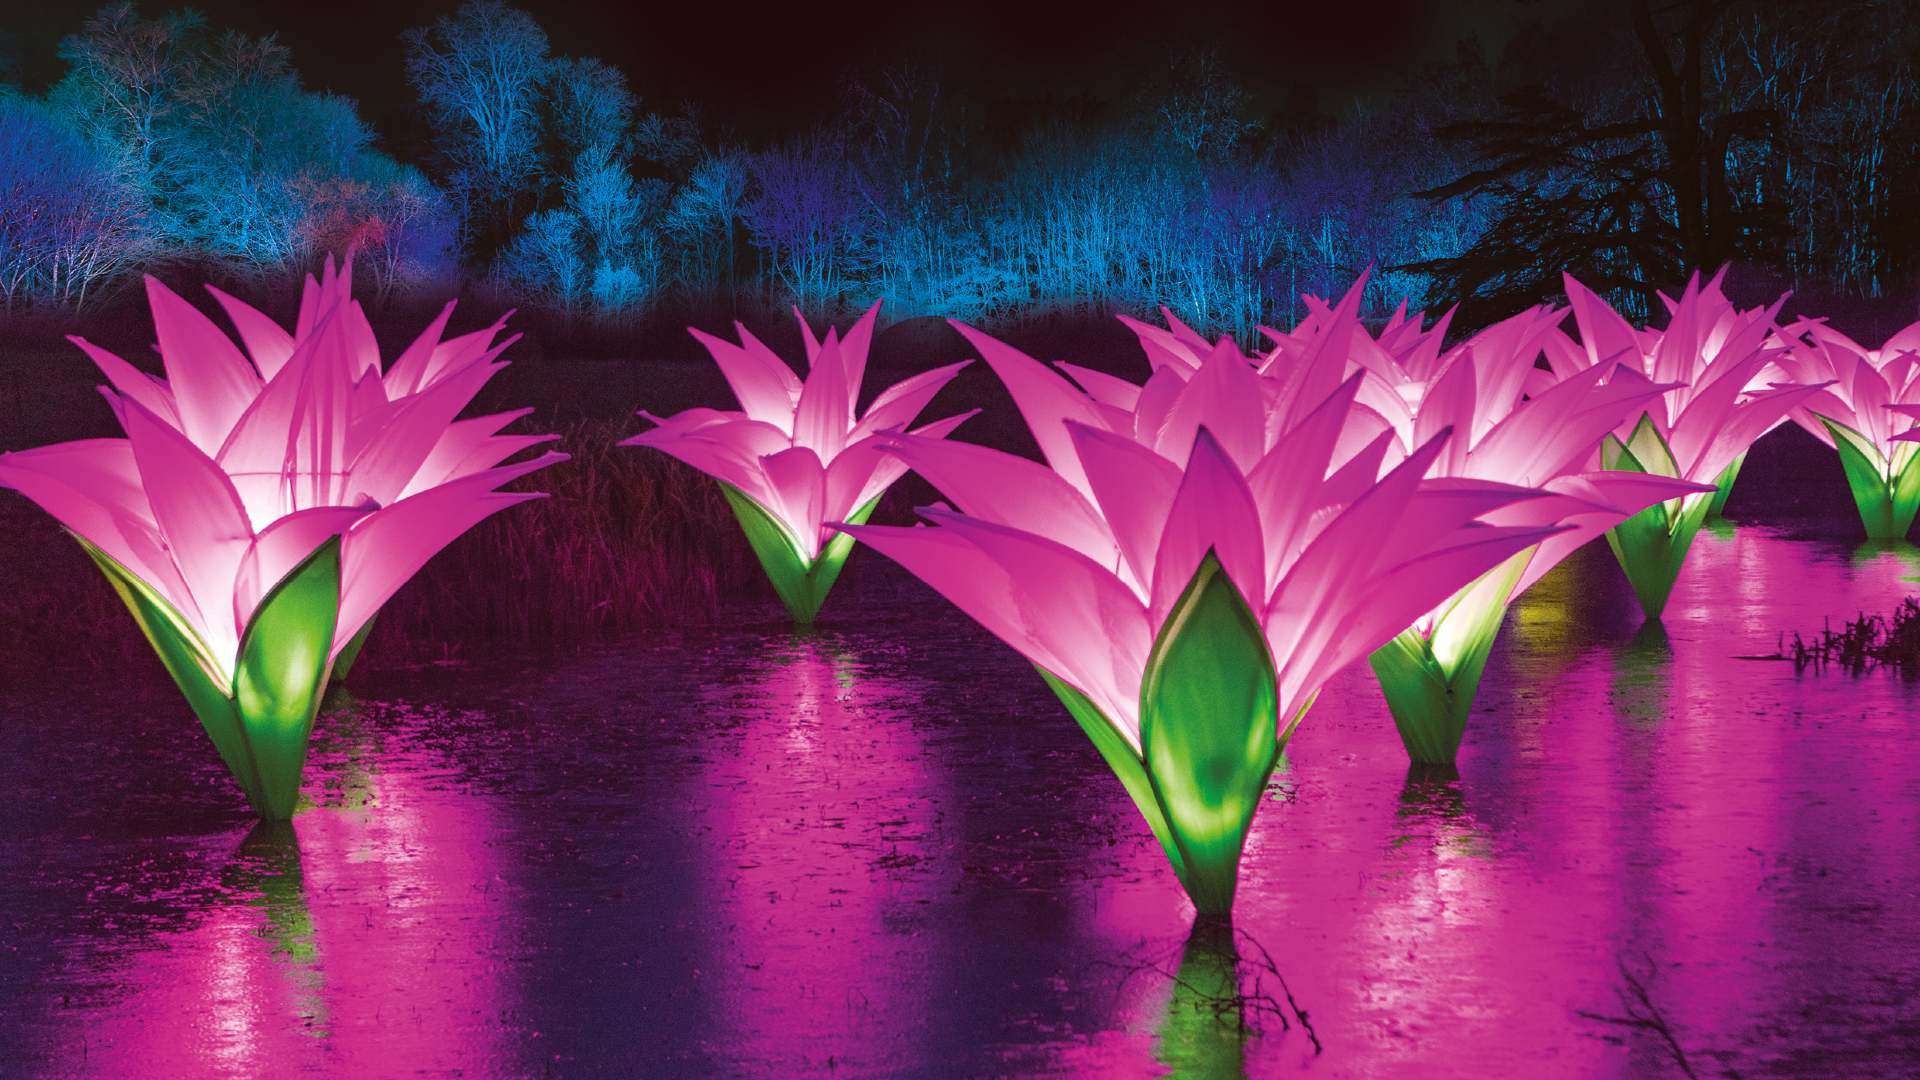 After-Dark Light Festival Lightscape Will Brighten Up the Brisbane City Botanic Gardens This Spring